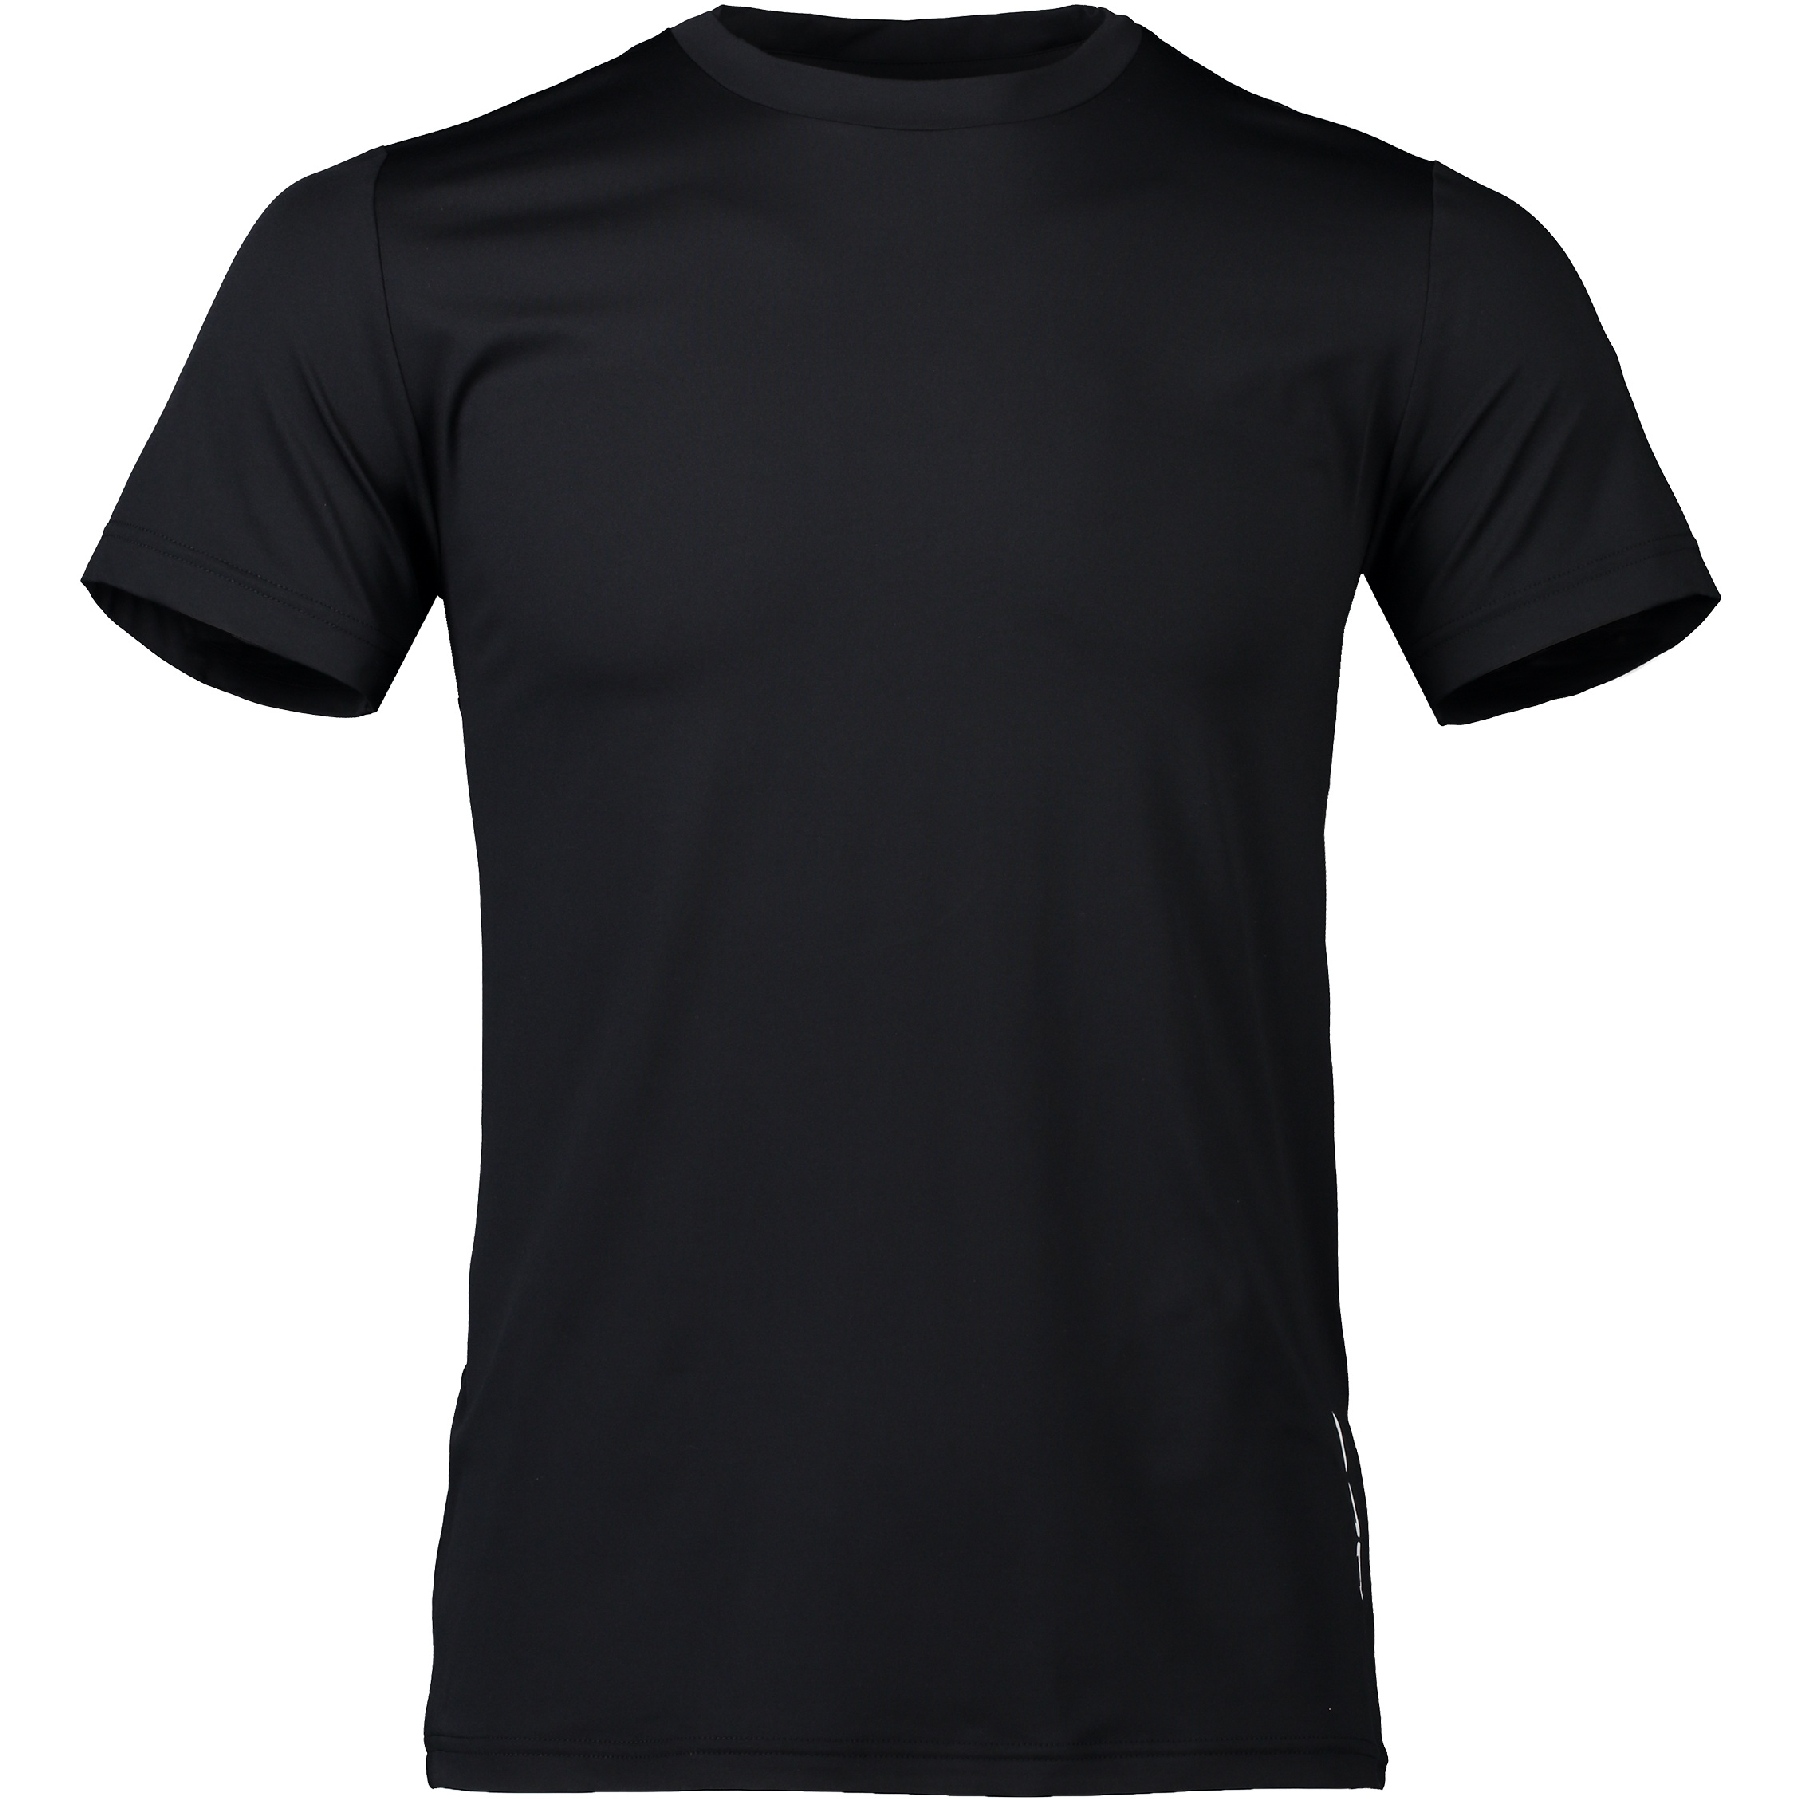 Productfoto van POC Reform Enduro Light T-Shirt Heren - 1002 Uranium Black